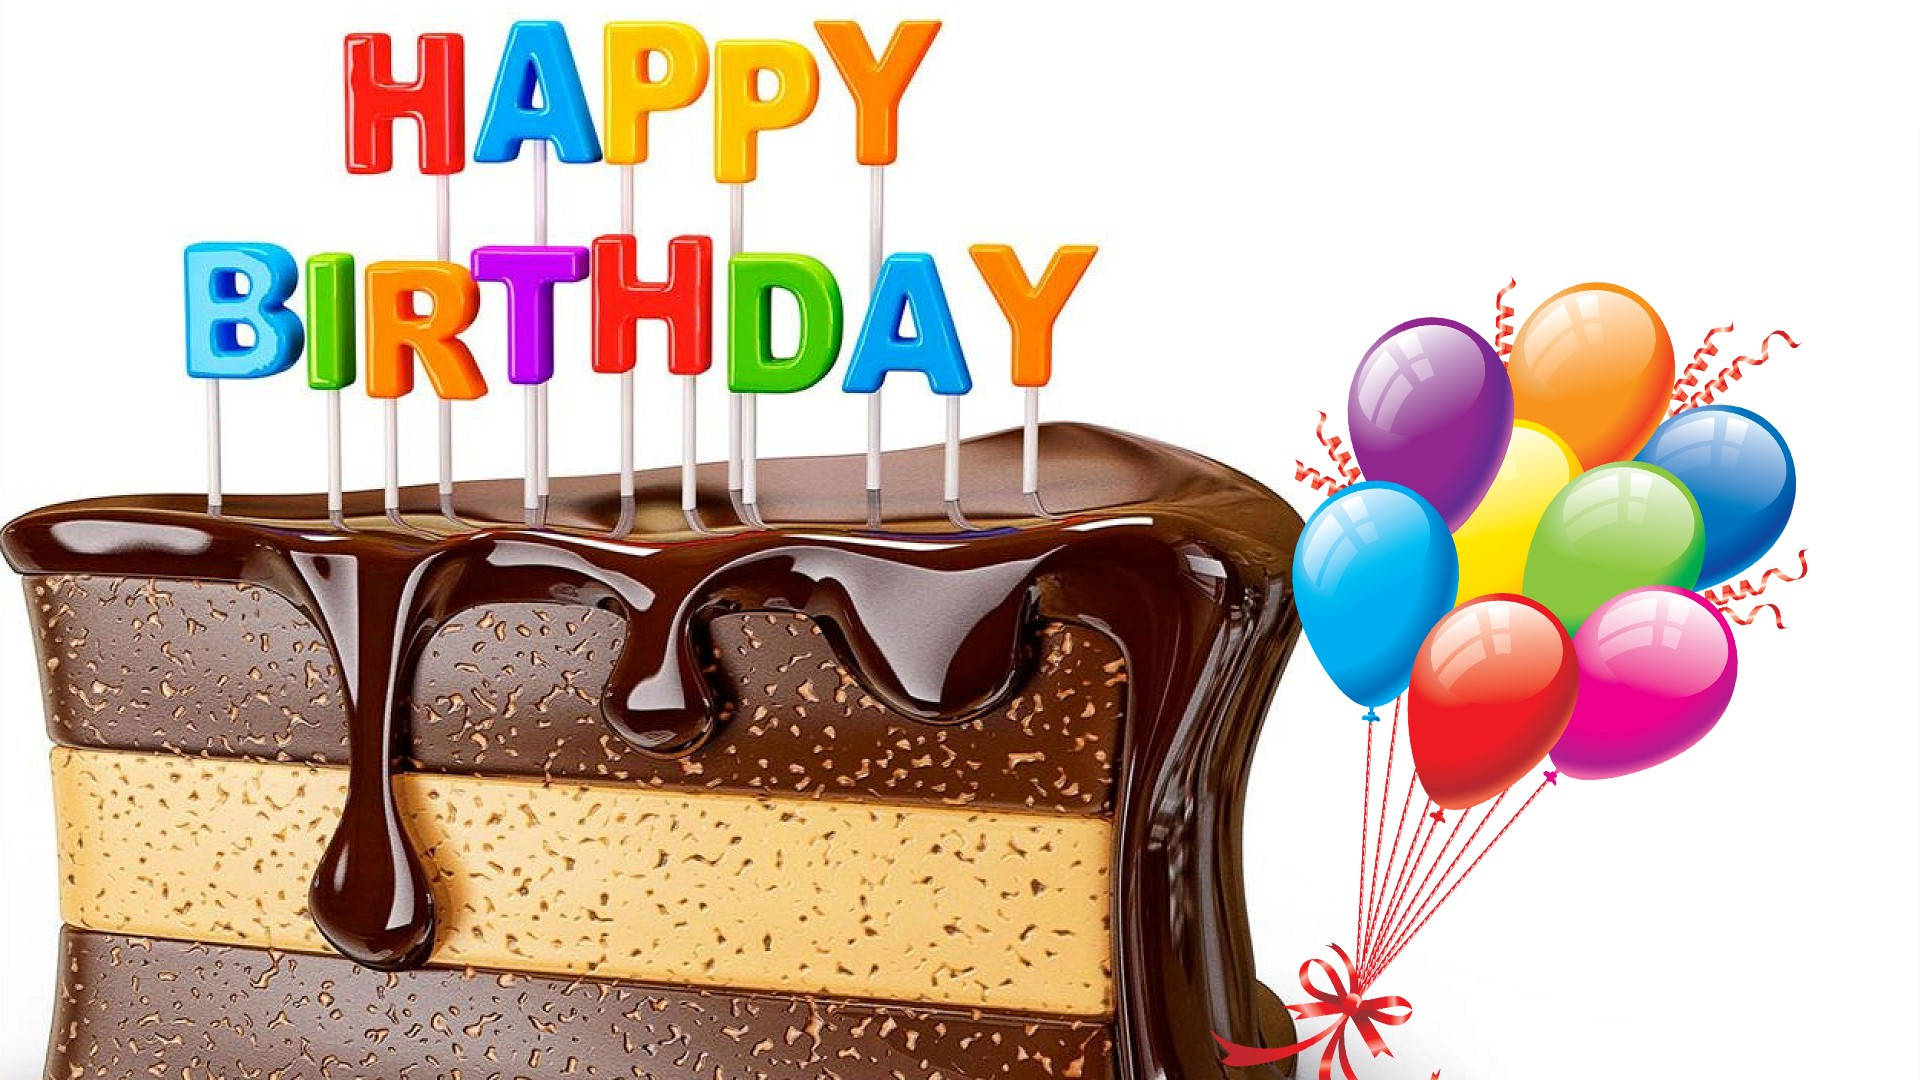 Celebrate In Style With Aesthetic Happy Birthday Cake Slice